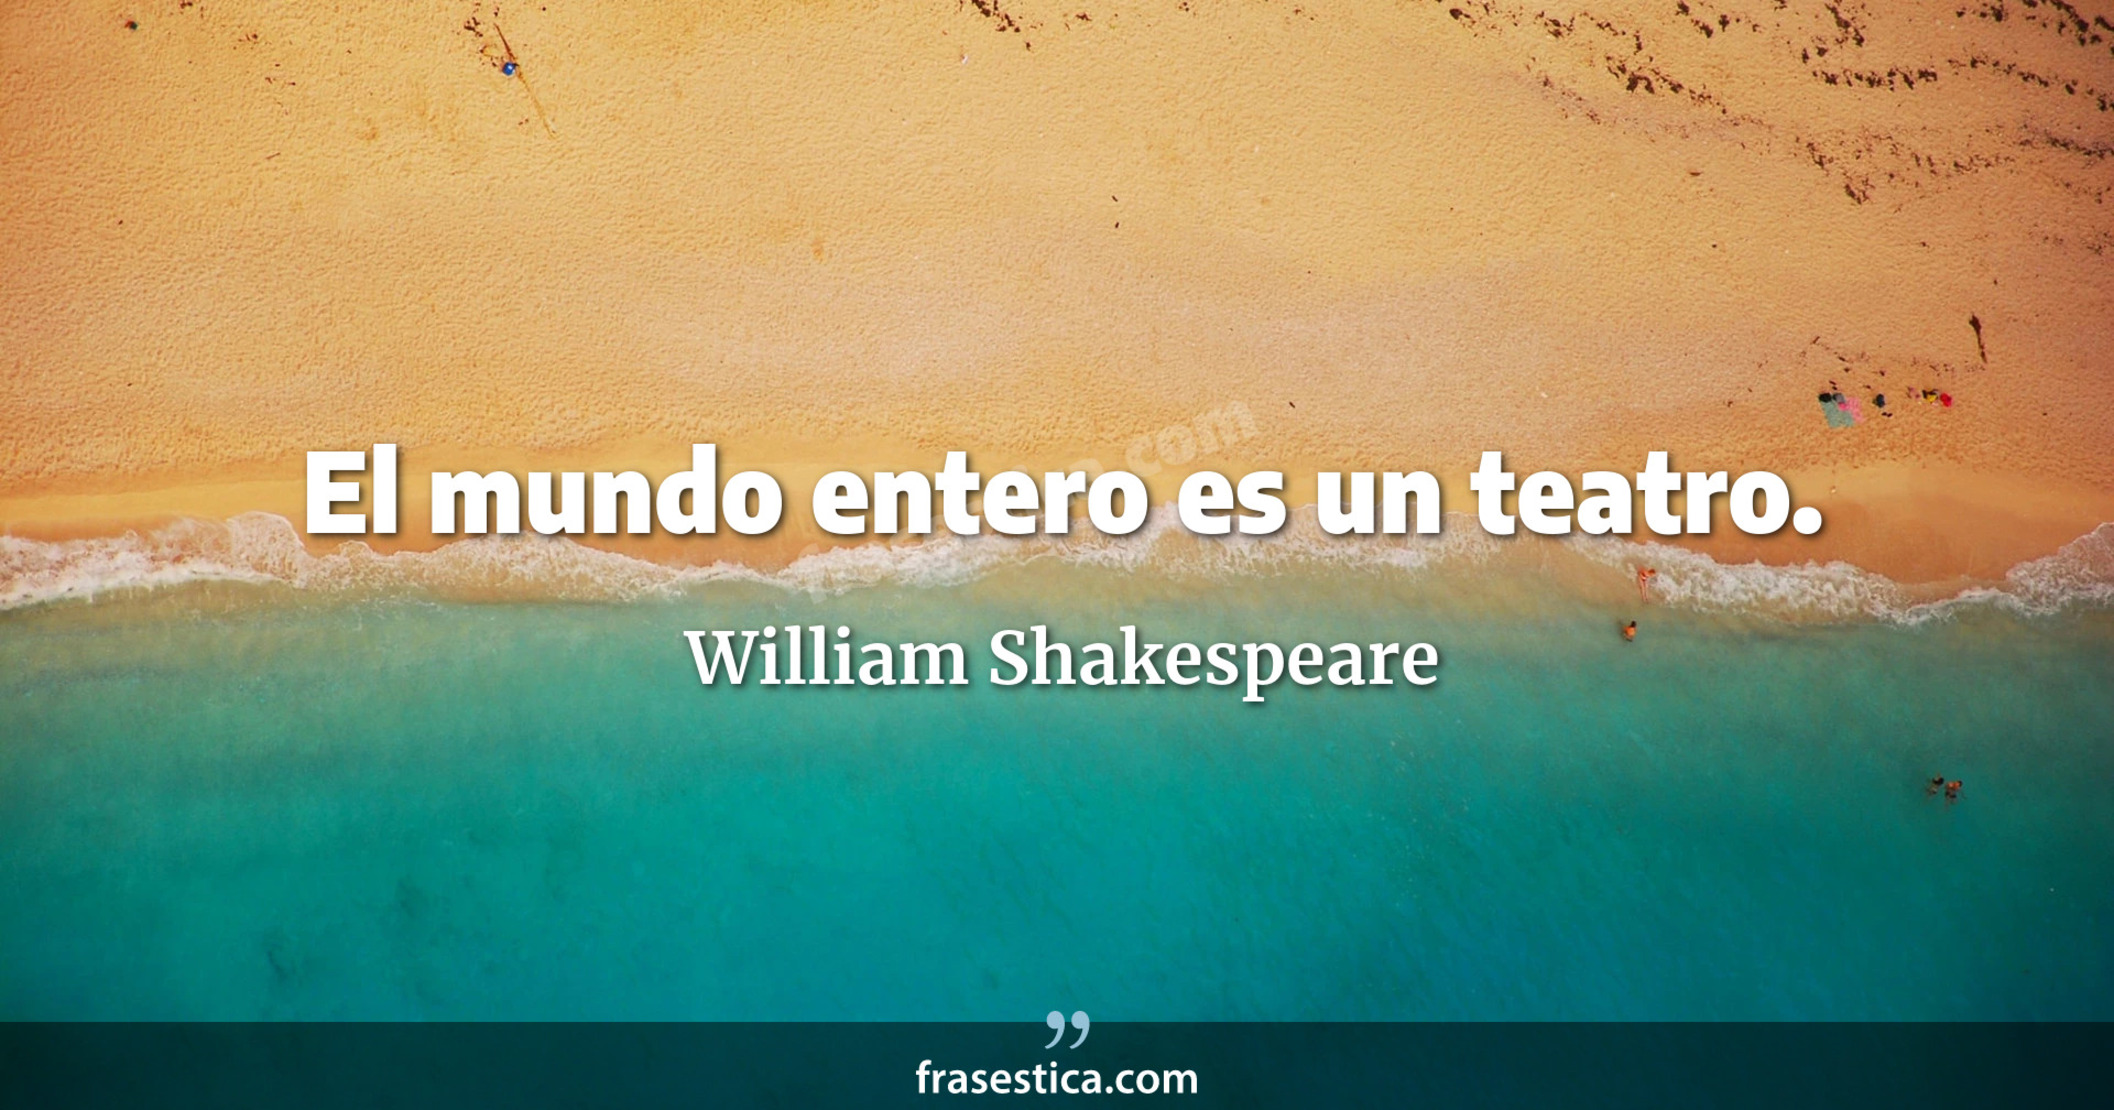 El mundo entero es un teatro. - William Shakespeare